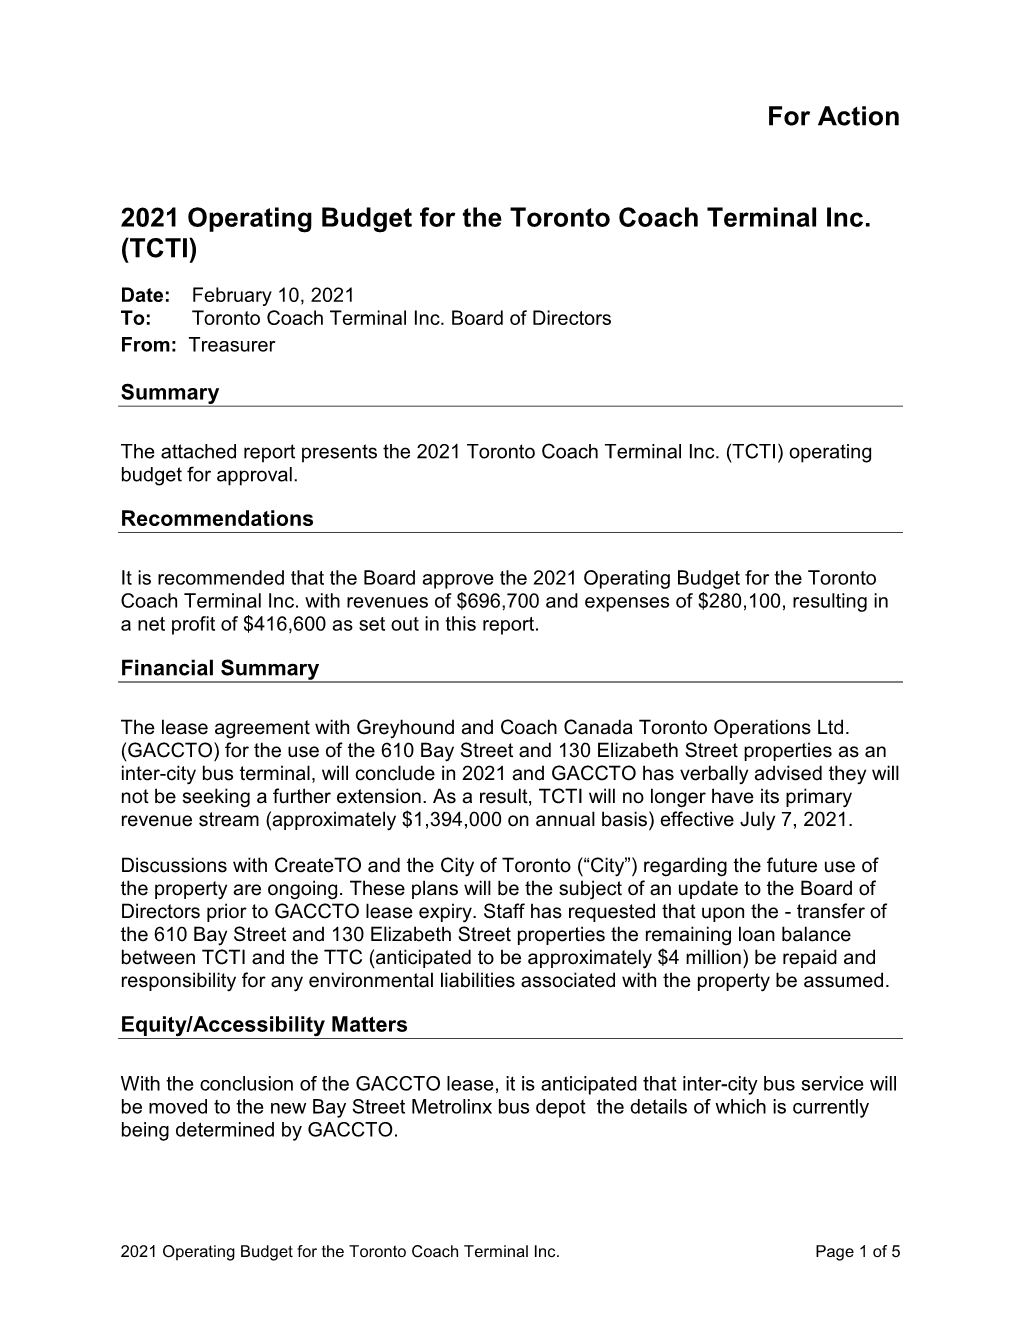 2021 Operating Budget for the Toronto Coach Terminal Inc. (TCTI)